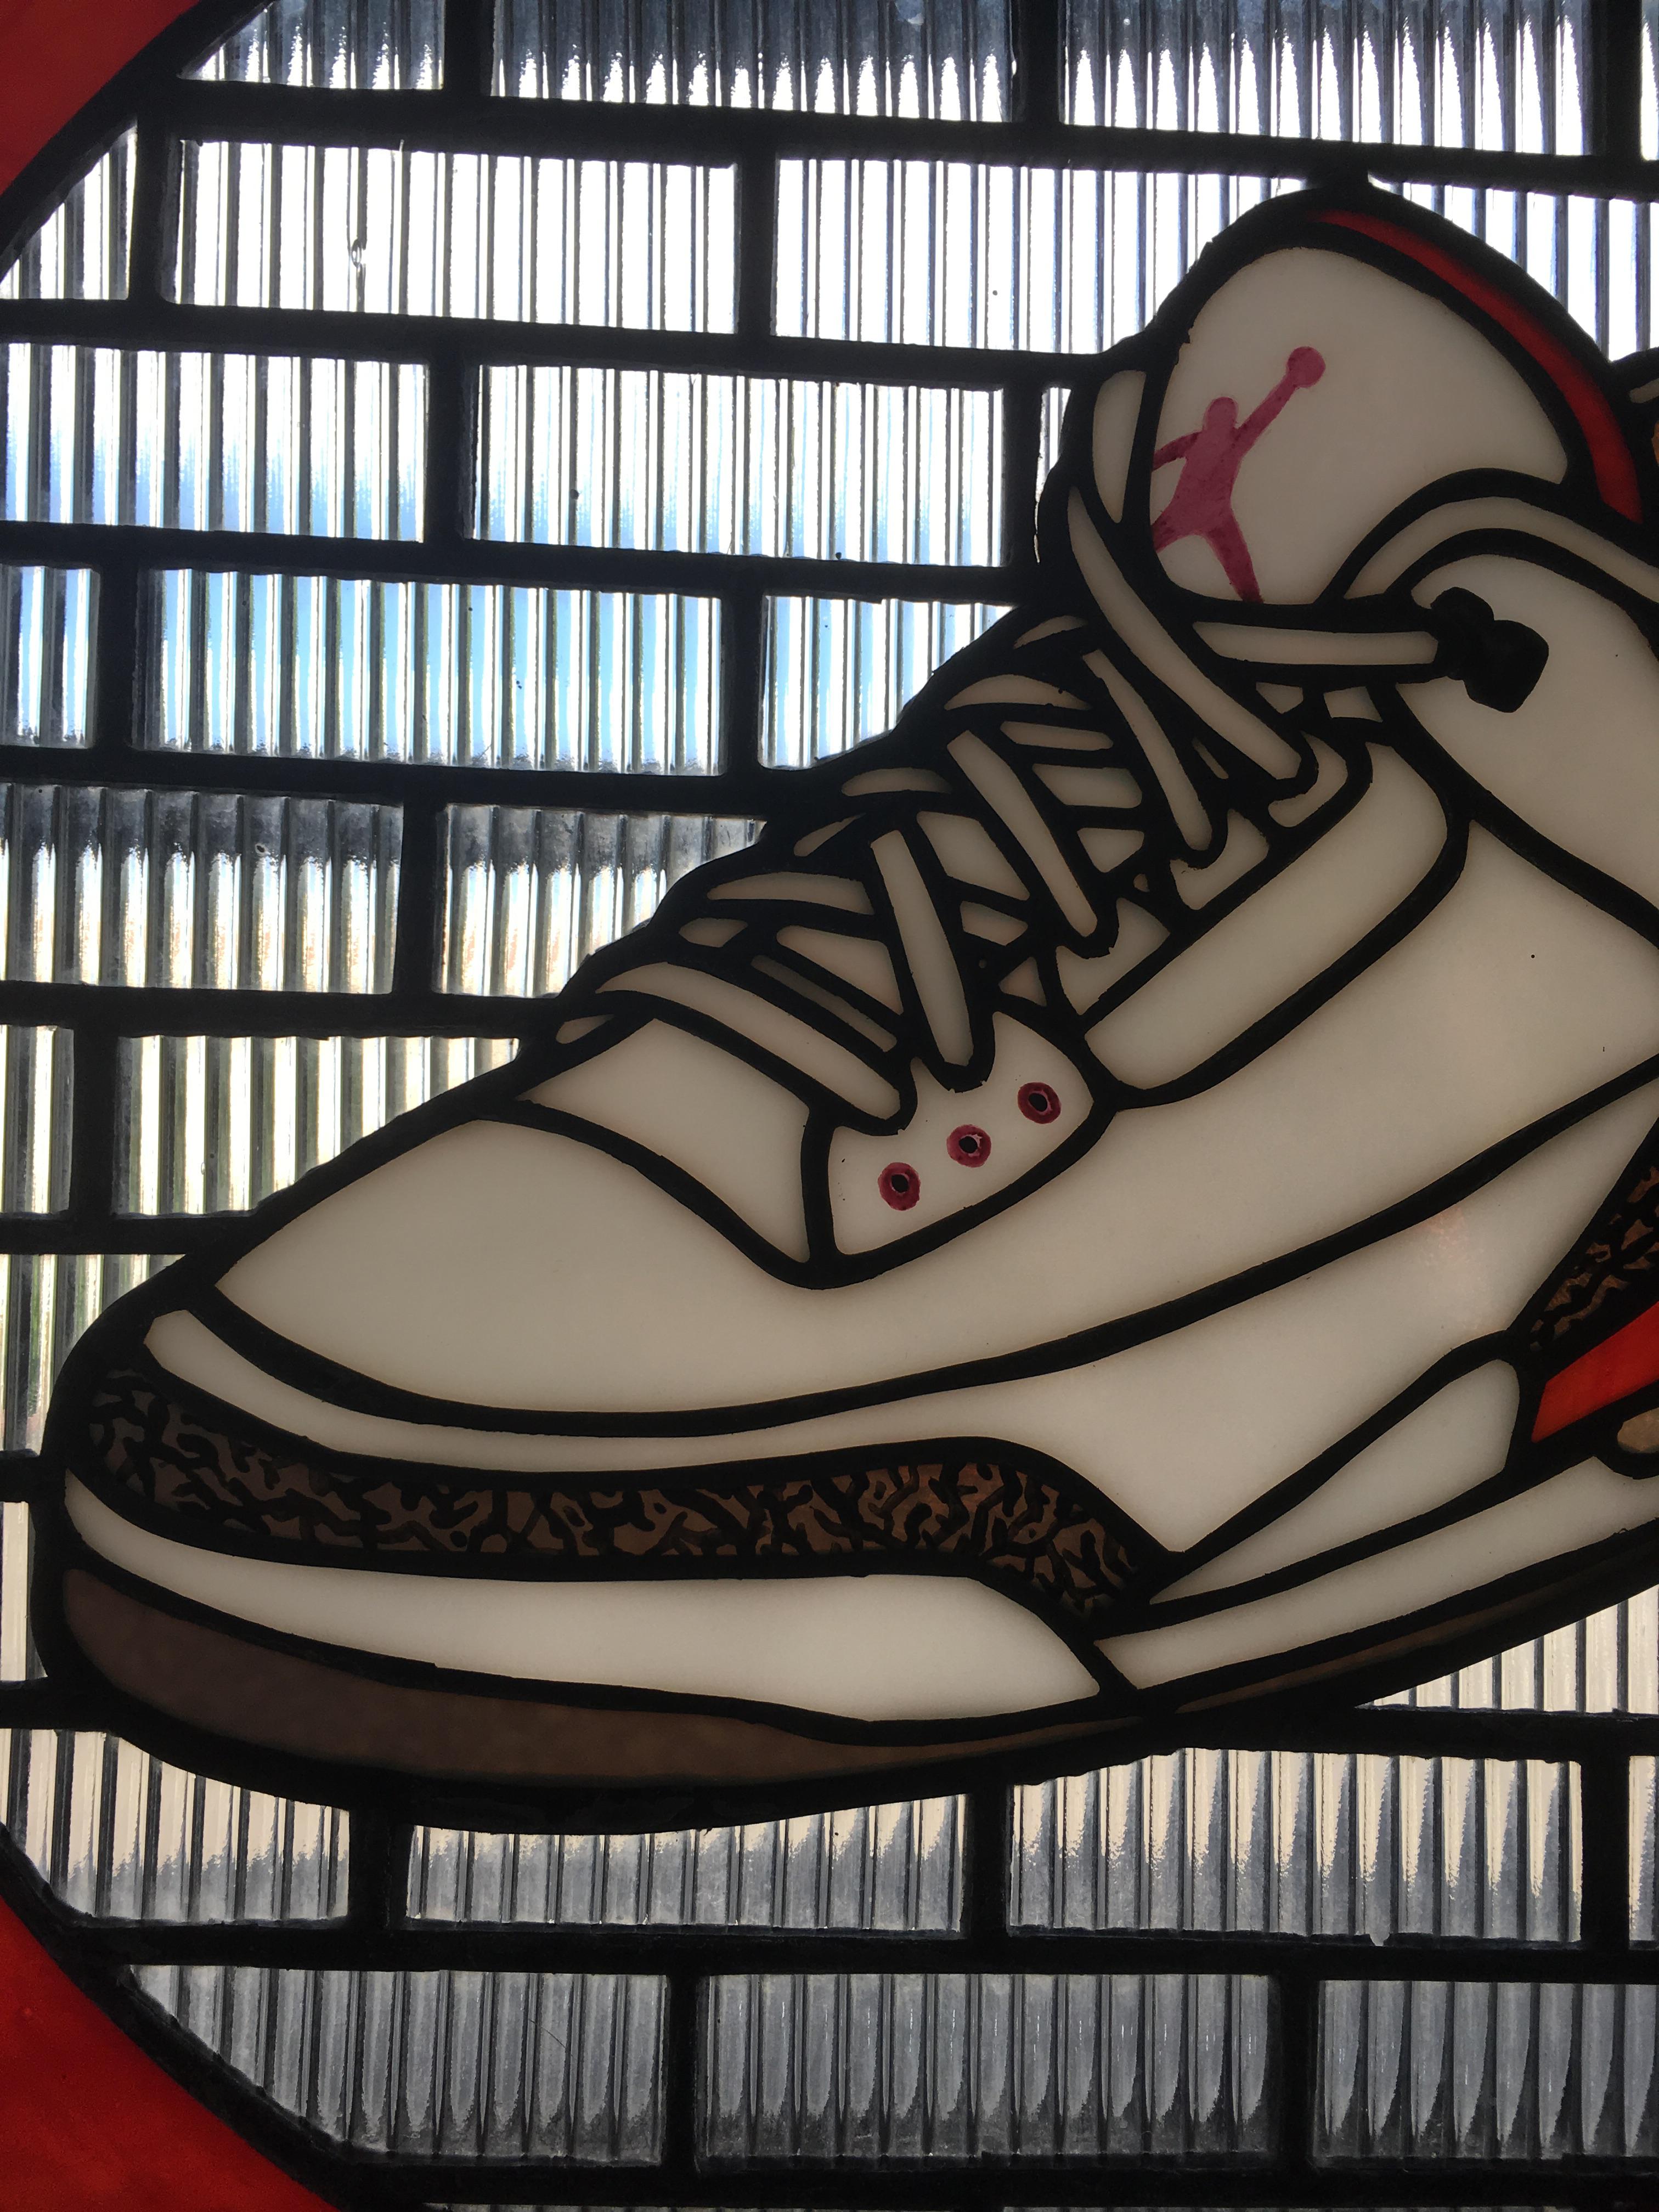 Jordan III, 2020, Stained Glass window, Nike, White, Red, Sneaker, Air Jordan - Contemporary Mixed Media Art by TF Dutchman